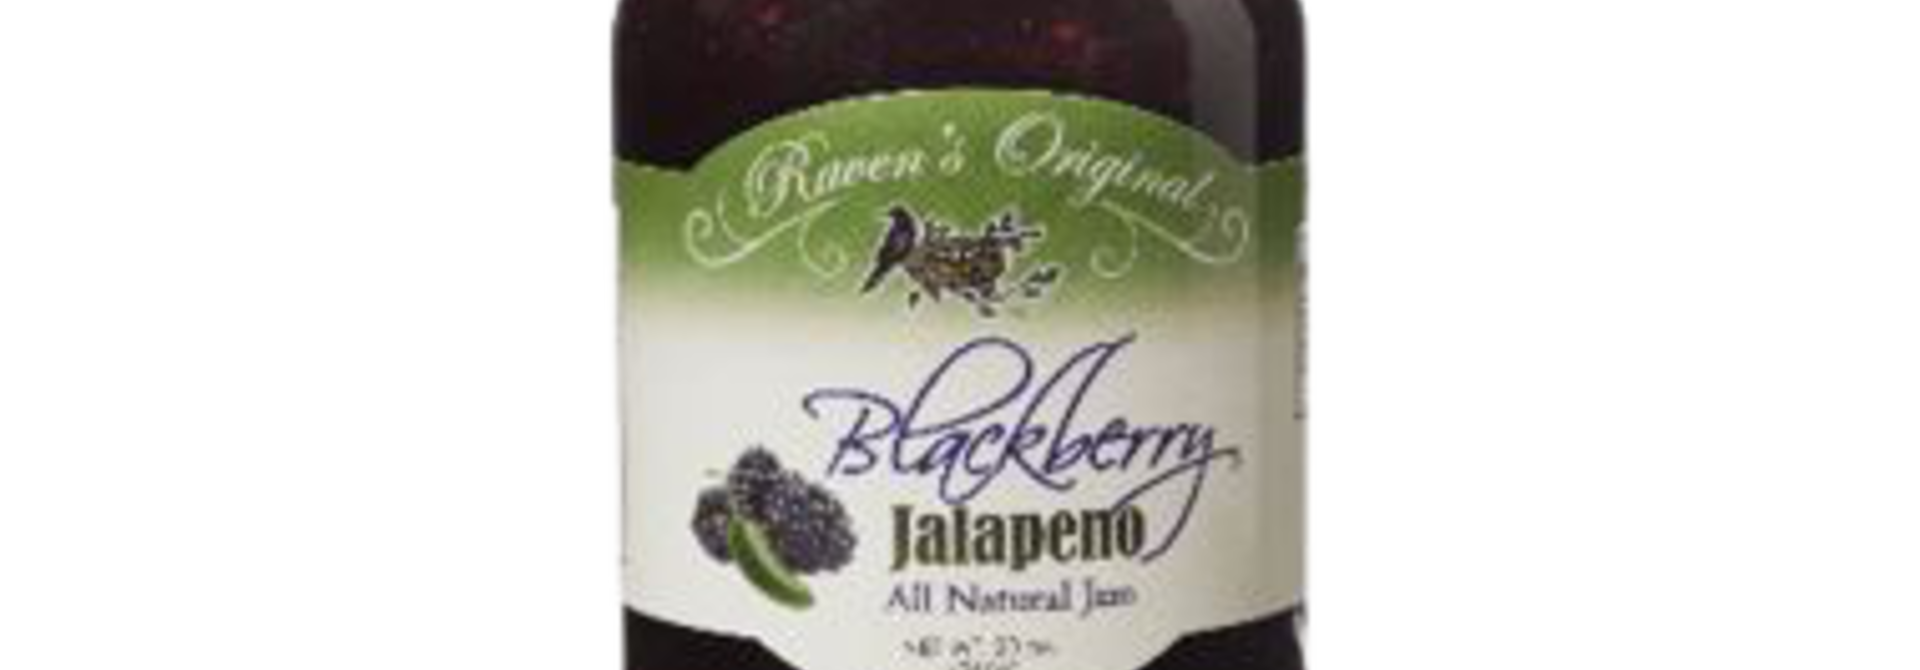 Blackberry Jalapeno | The Jam Collection - 20 oz